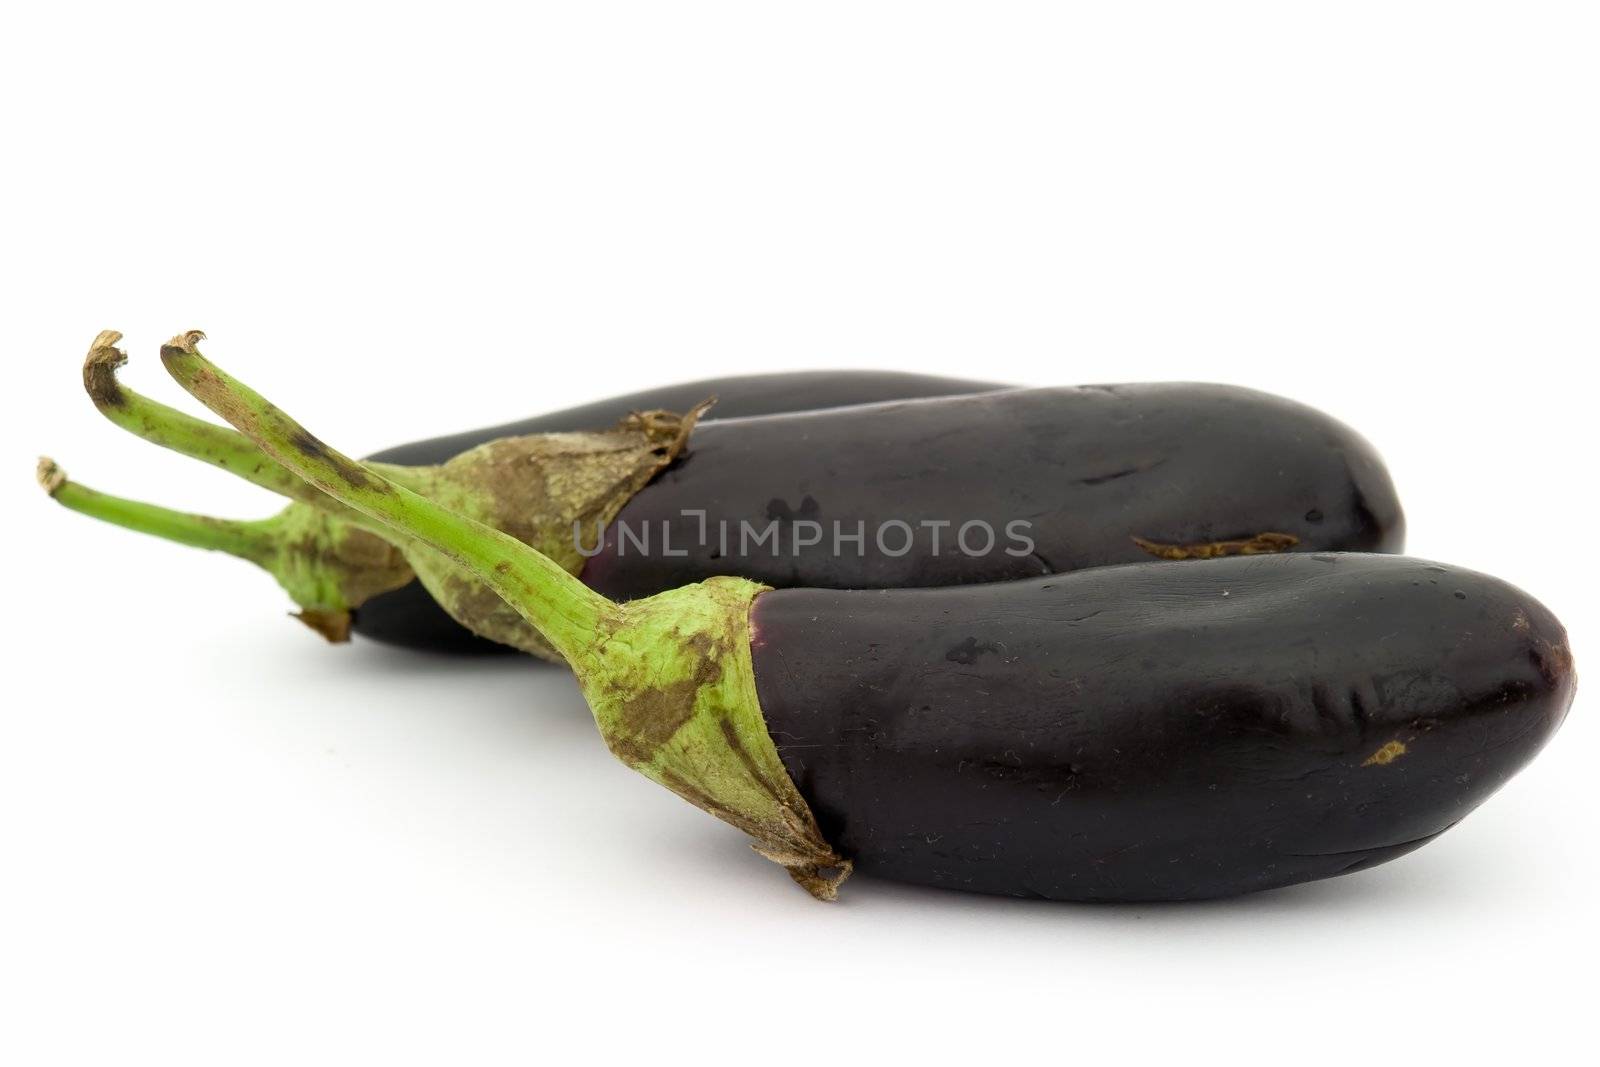 Some big eggplants on a white background.